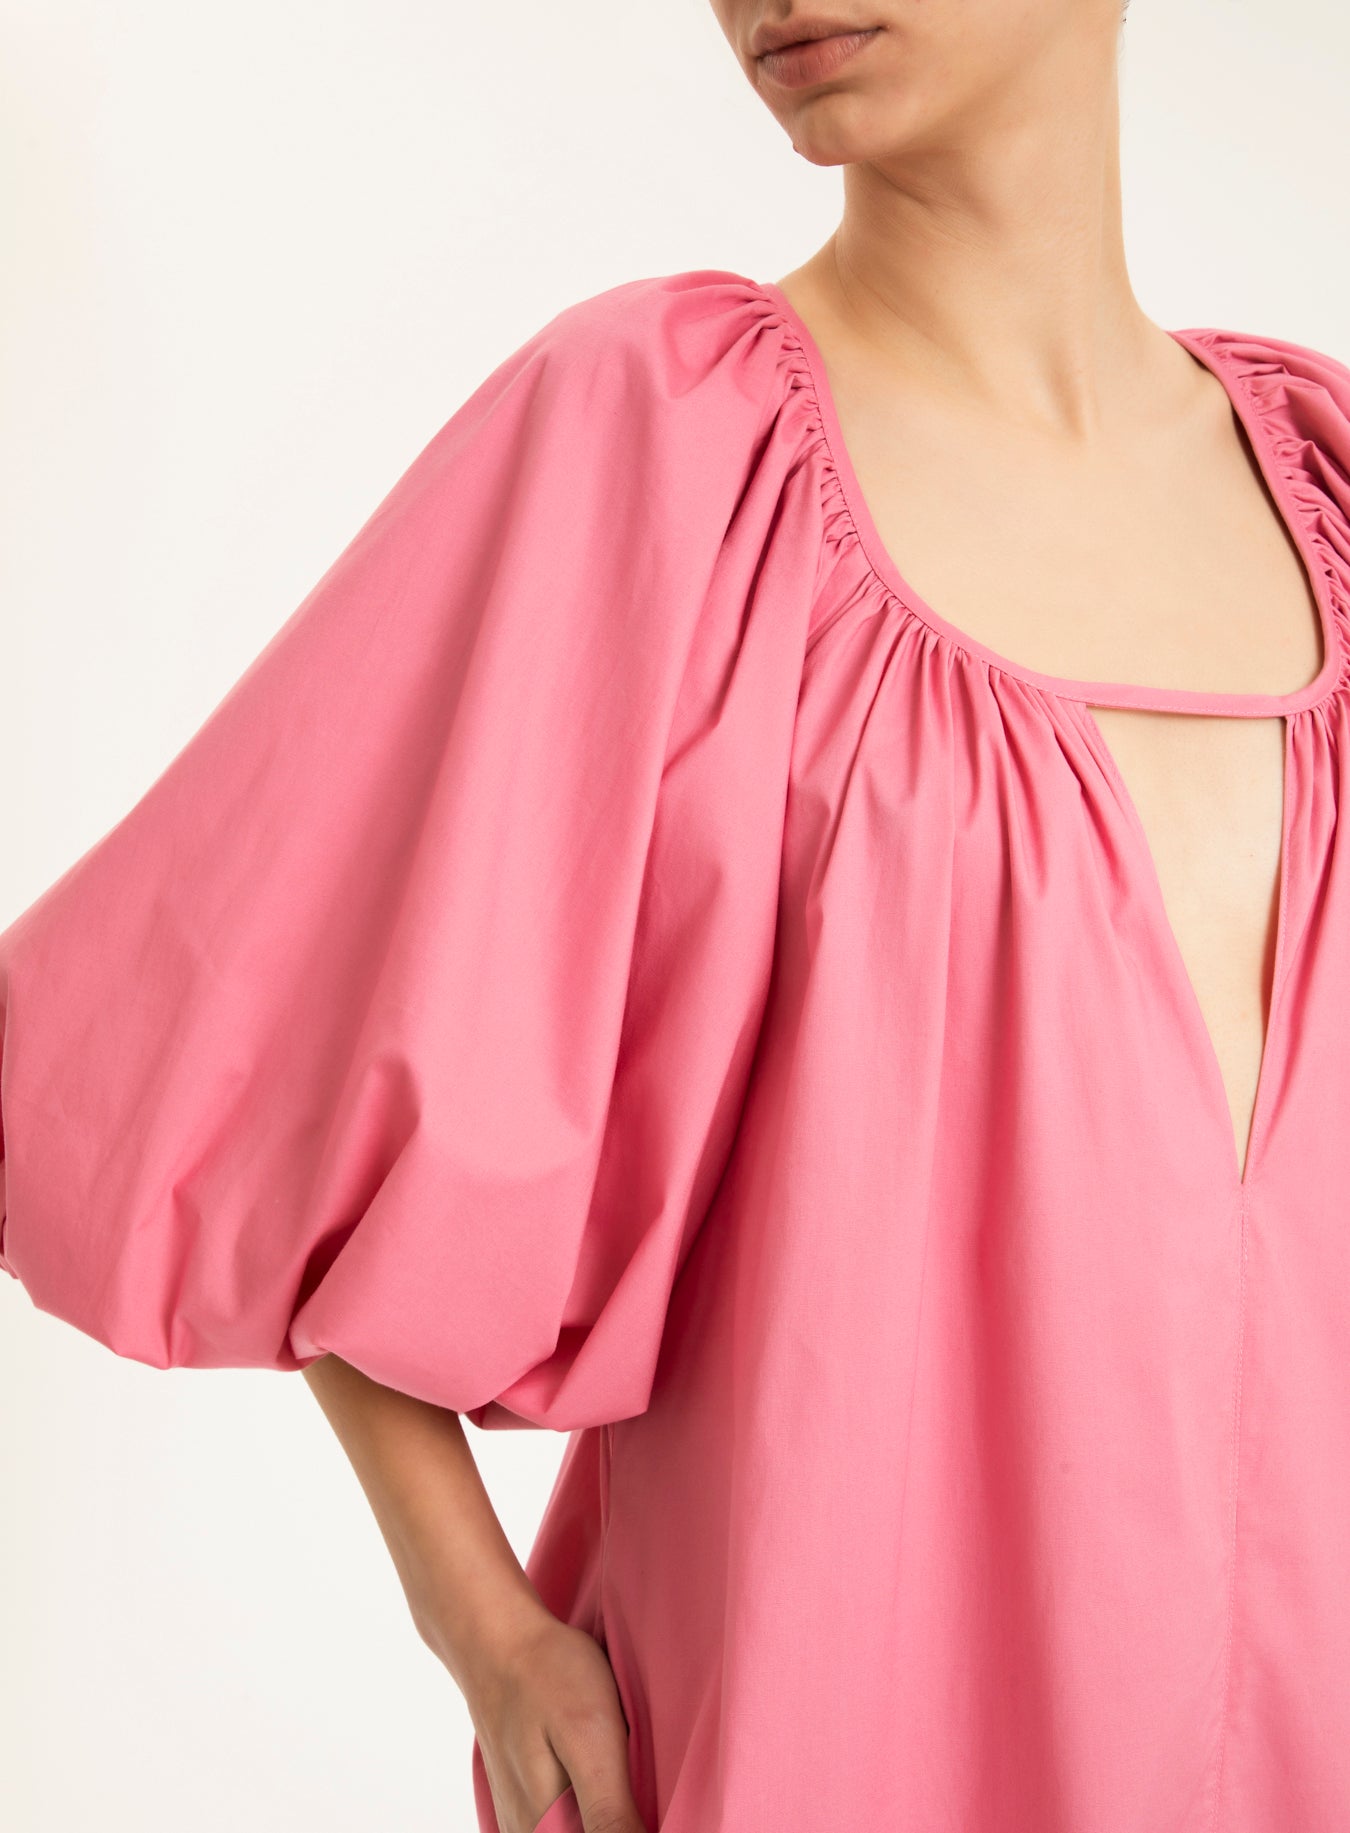 Effortless Chic Pink Puff-Sleeved Long Dress Detail